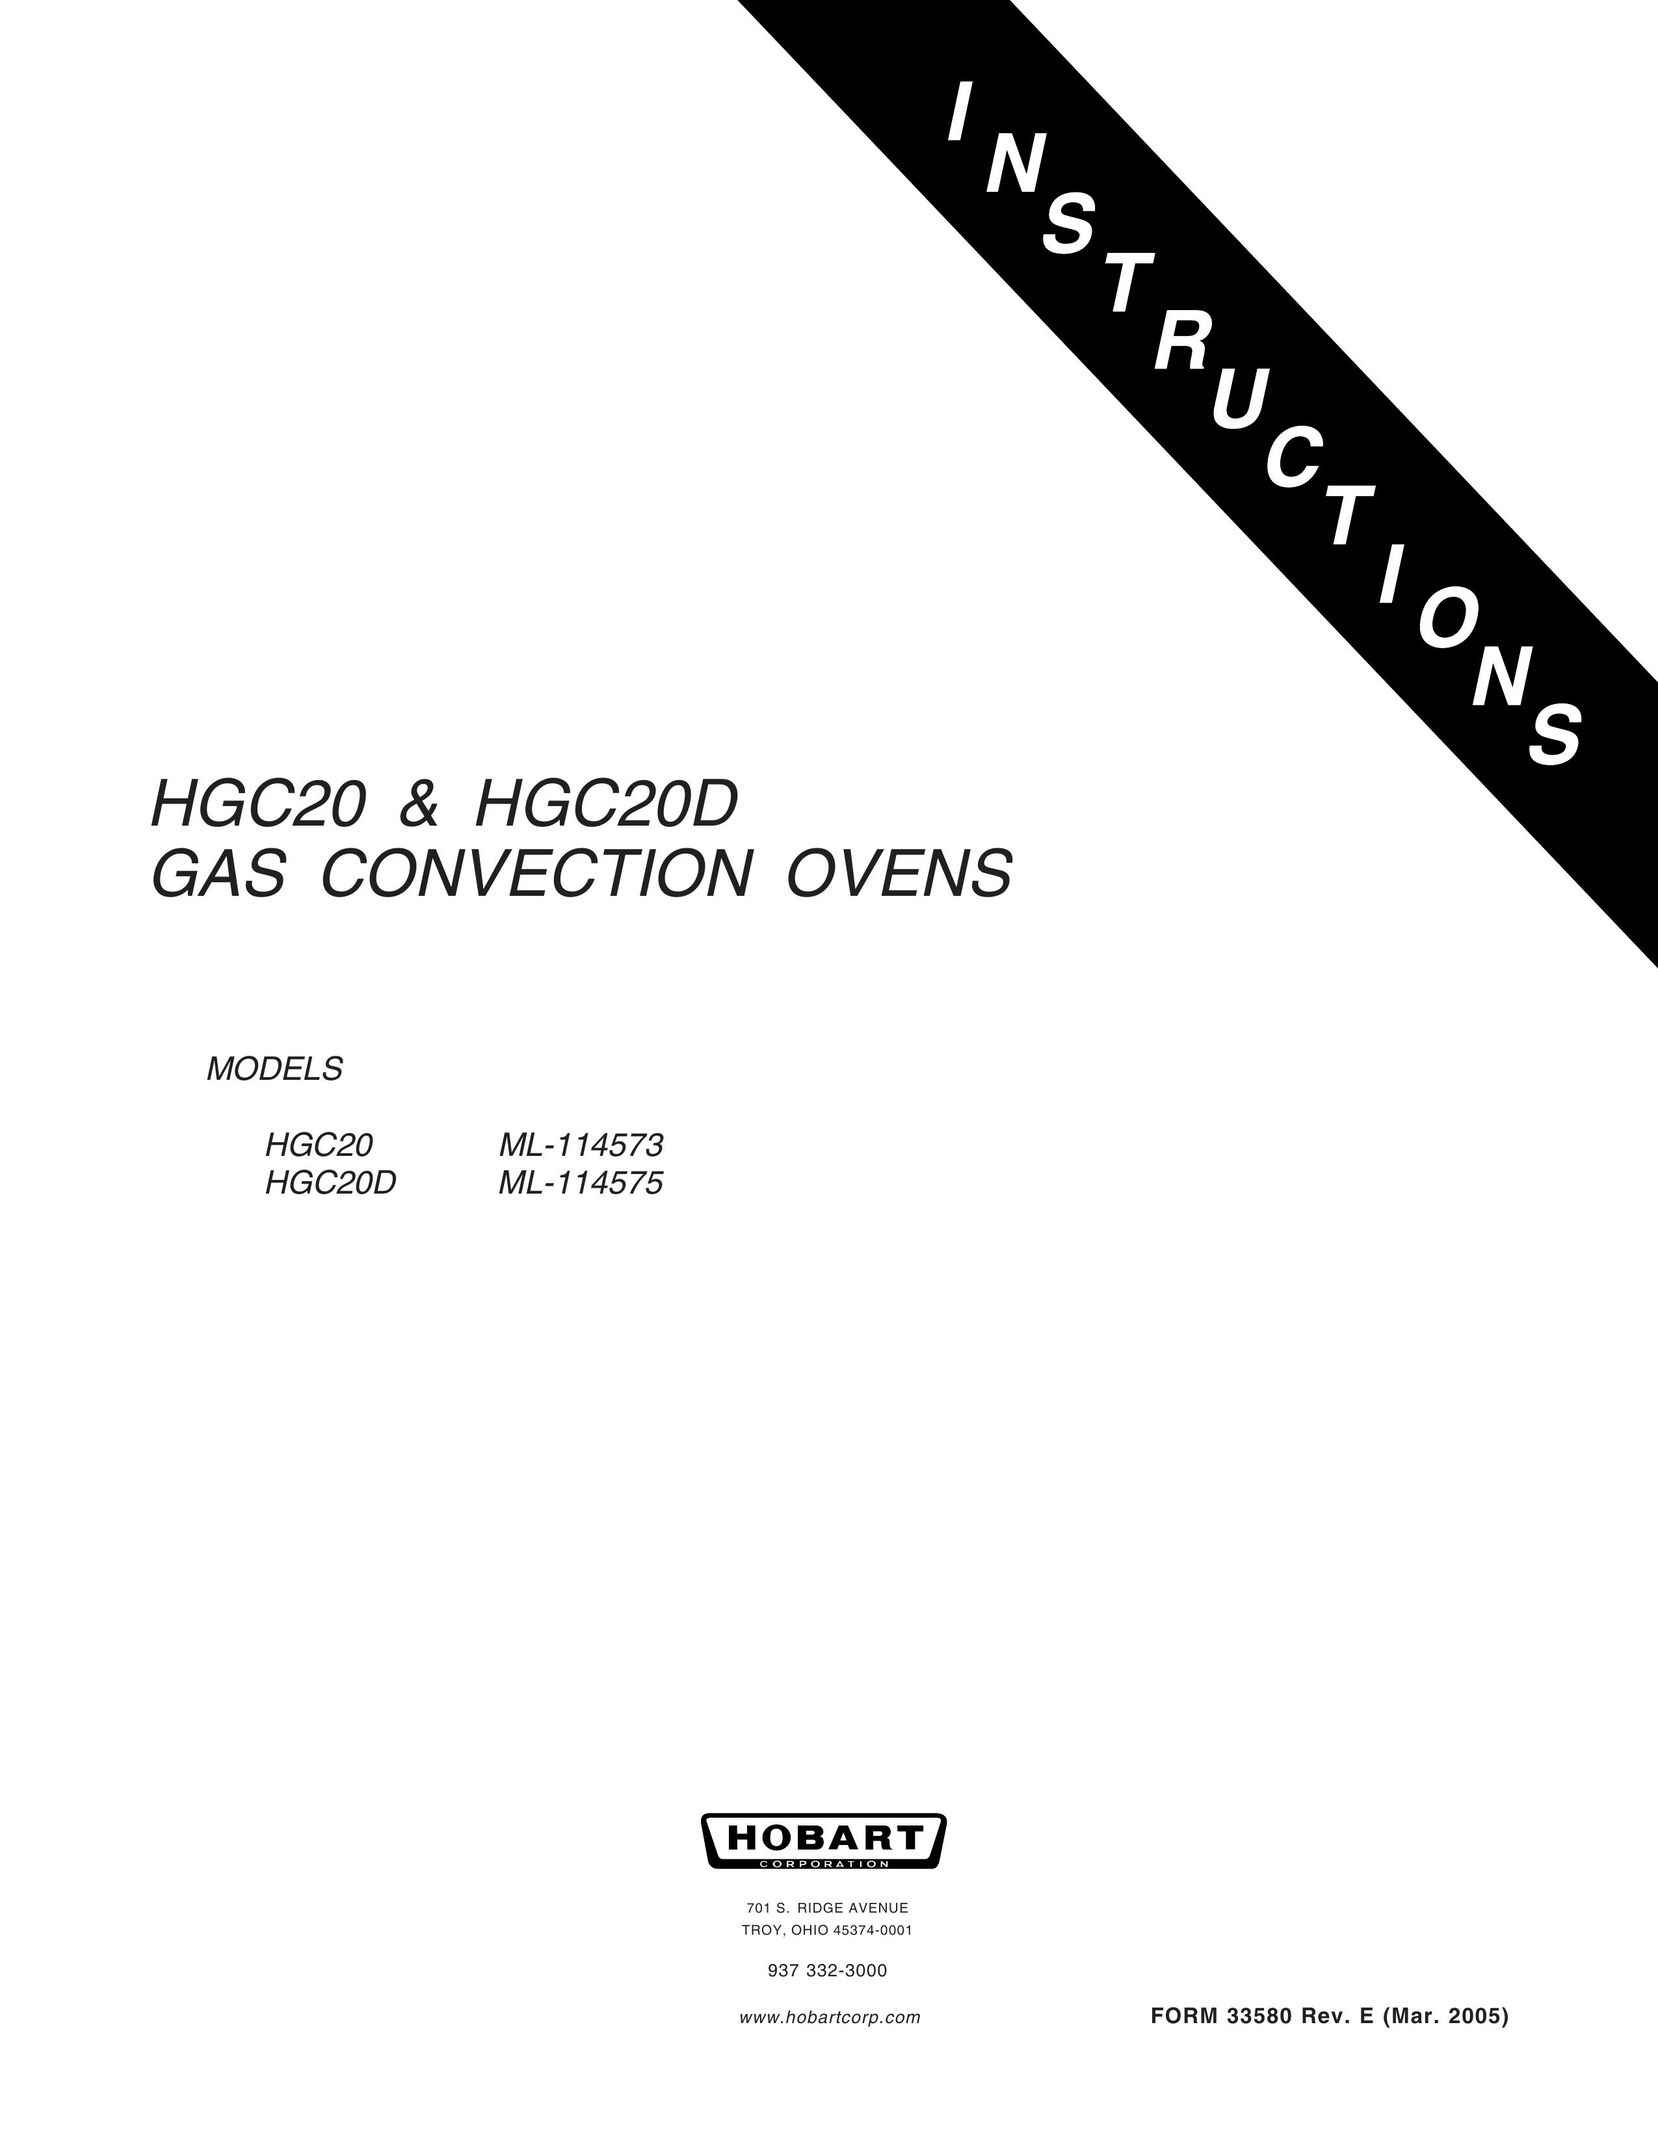 Hobart HGC20, HGC20, ML-114573, ML-114575 Convection Oven User Manual